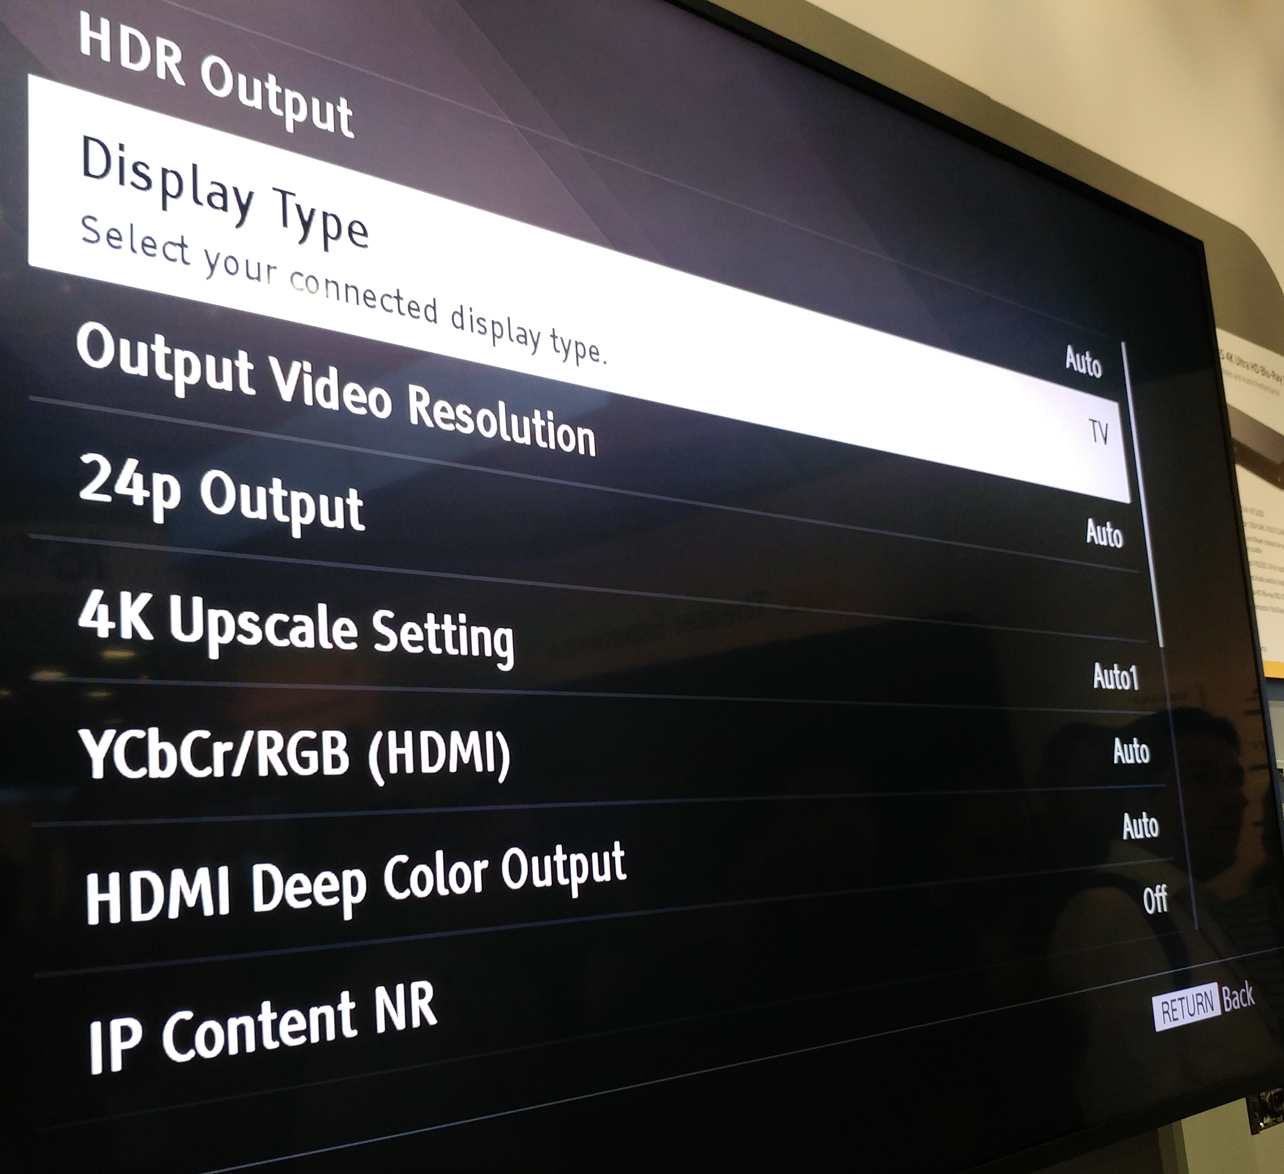 Sony UBP-X1000ES Ultra Hd Blu-ray Player CEDIA 2016 Impressions Screen Settings Display Type Projector